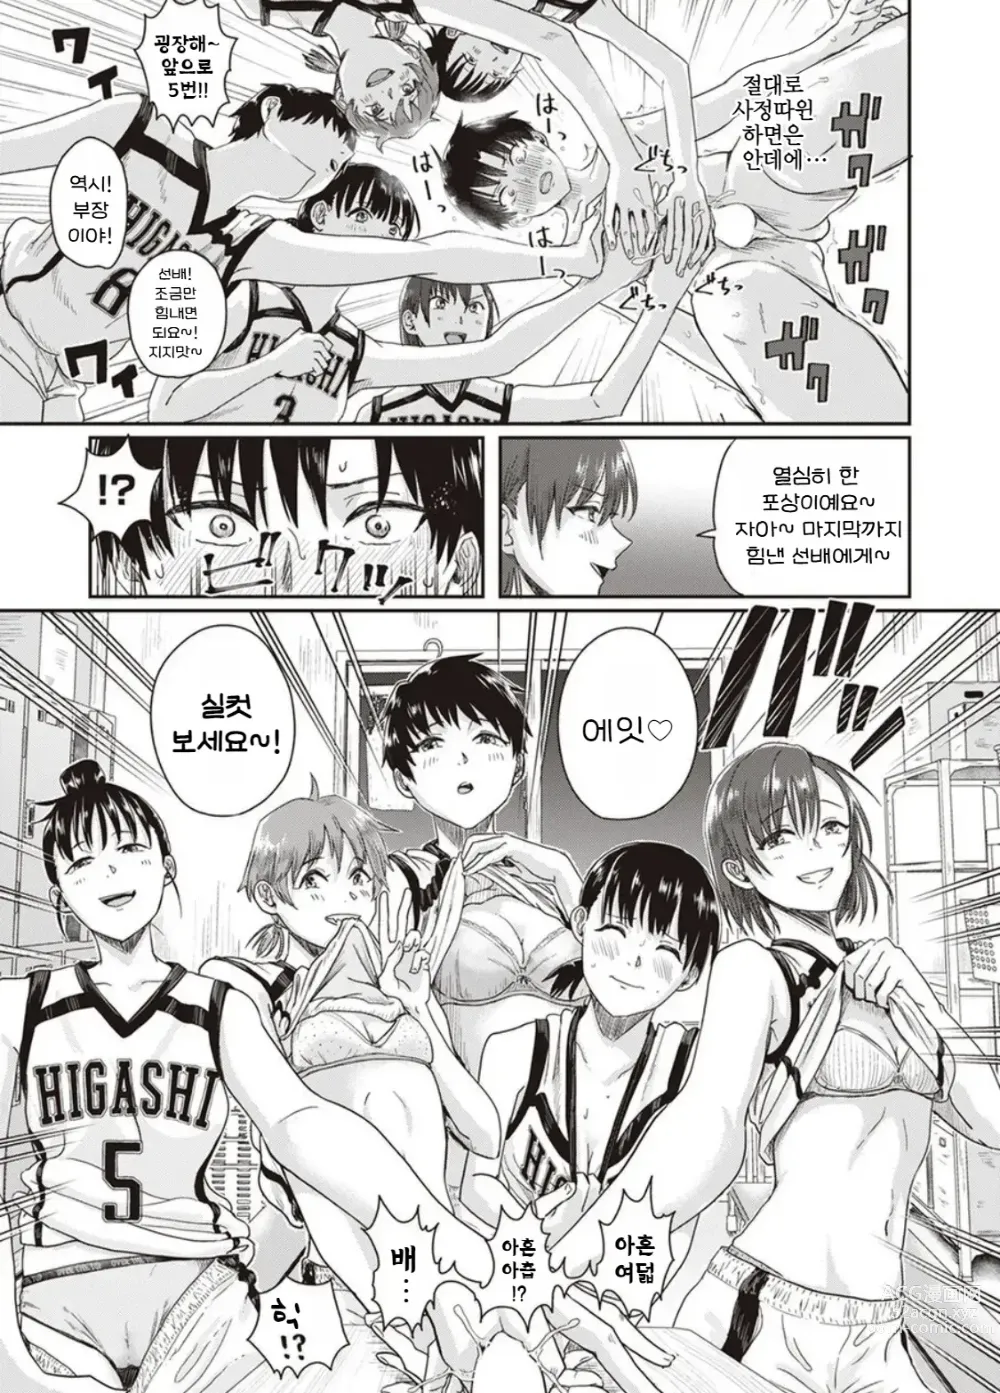 Page 21 of manga 1 on 5